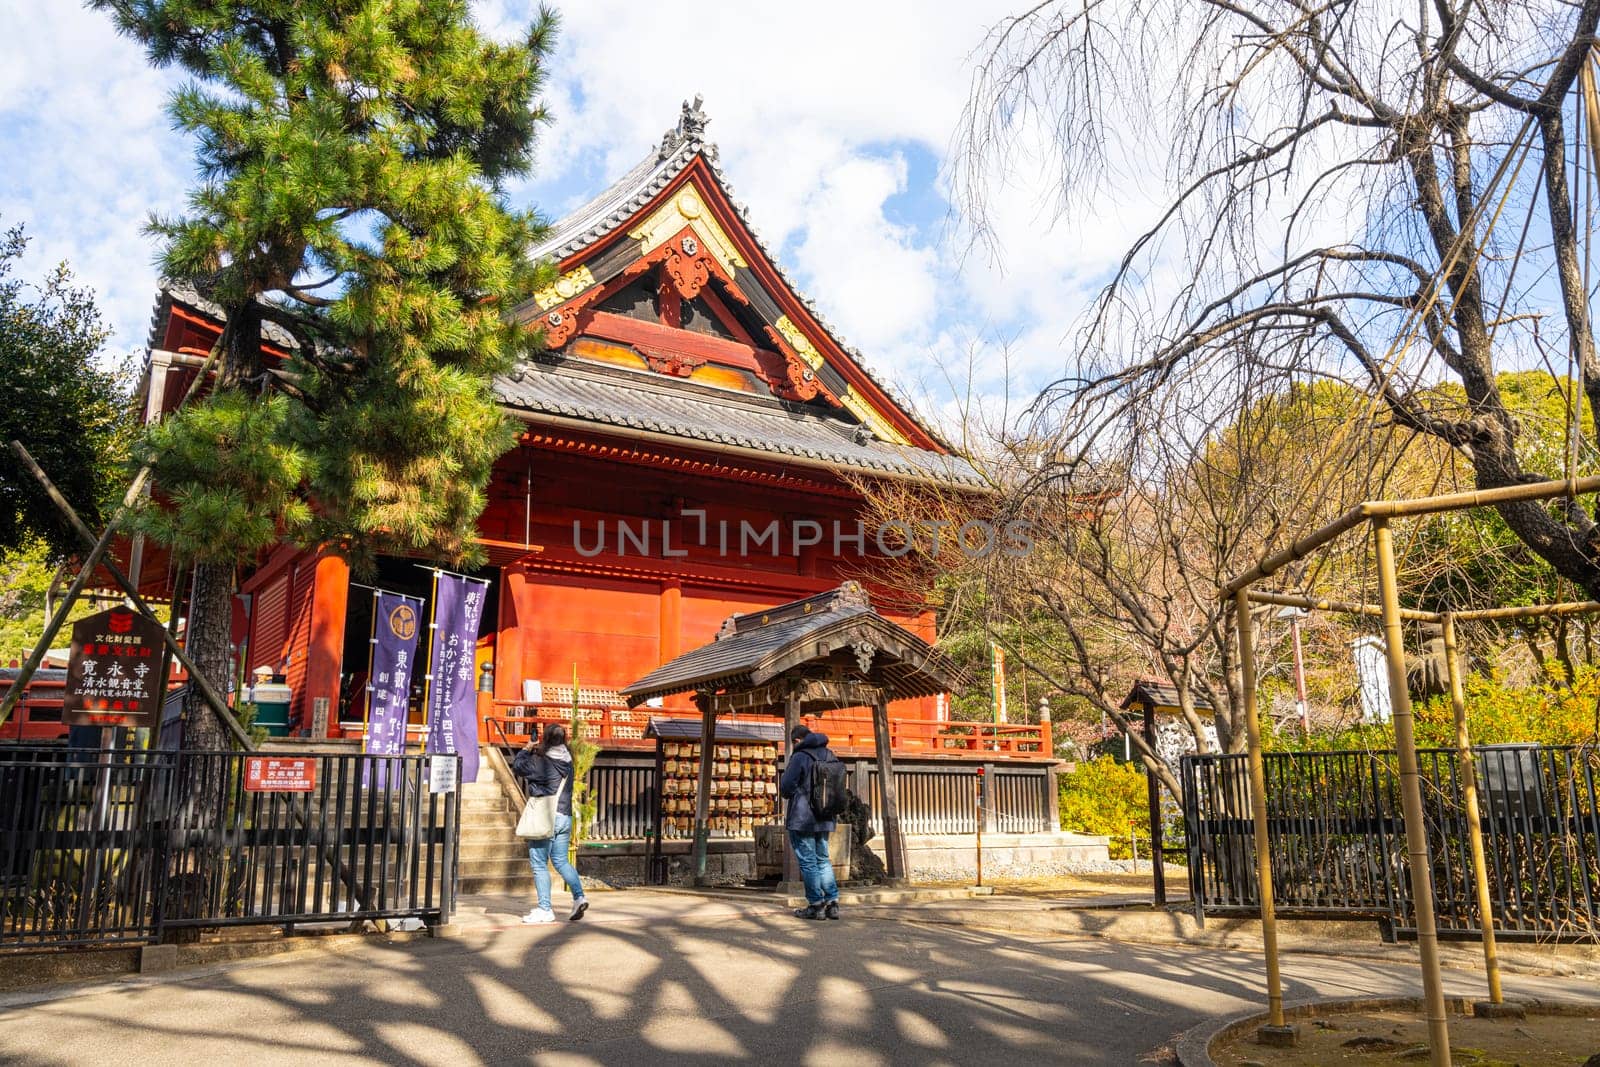  Kiyomizu Kannon-do Temple in Tokyo, Japan by sergiodv